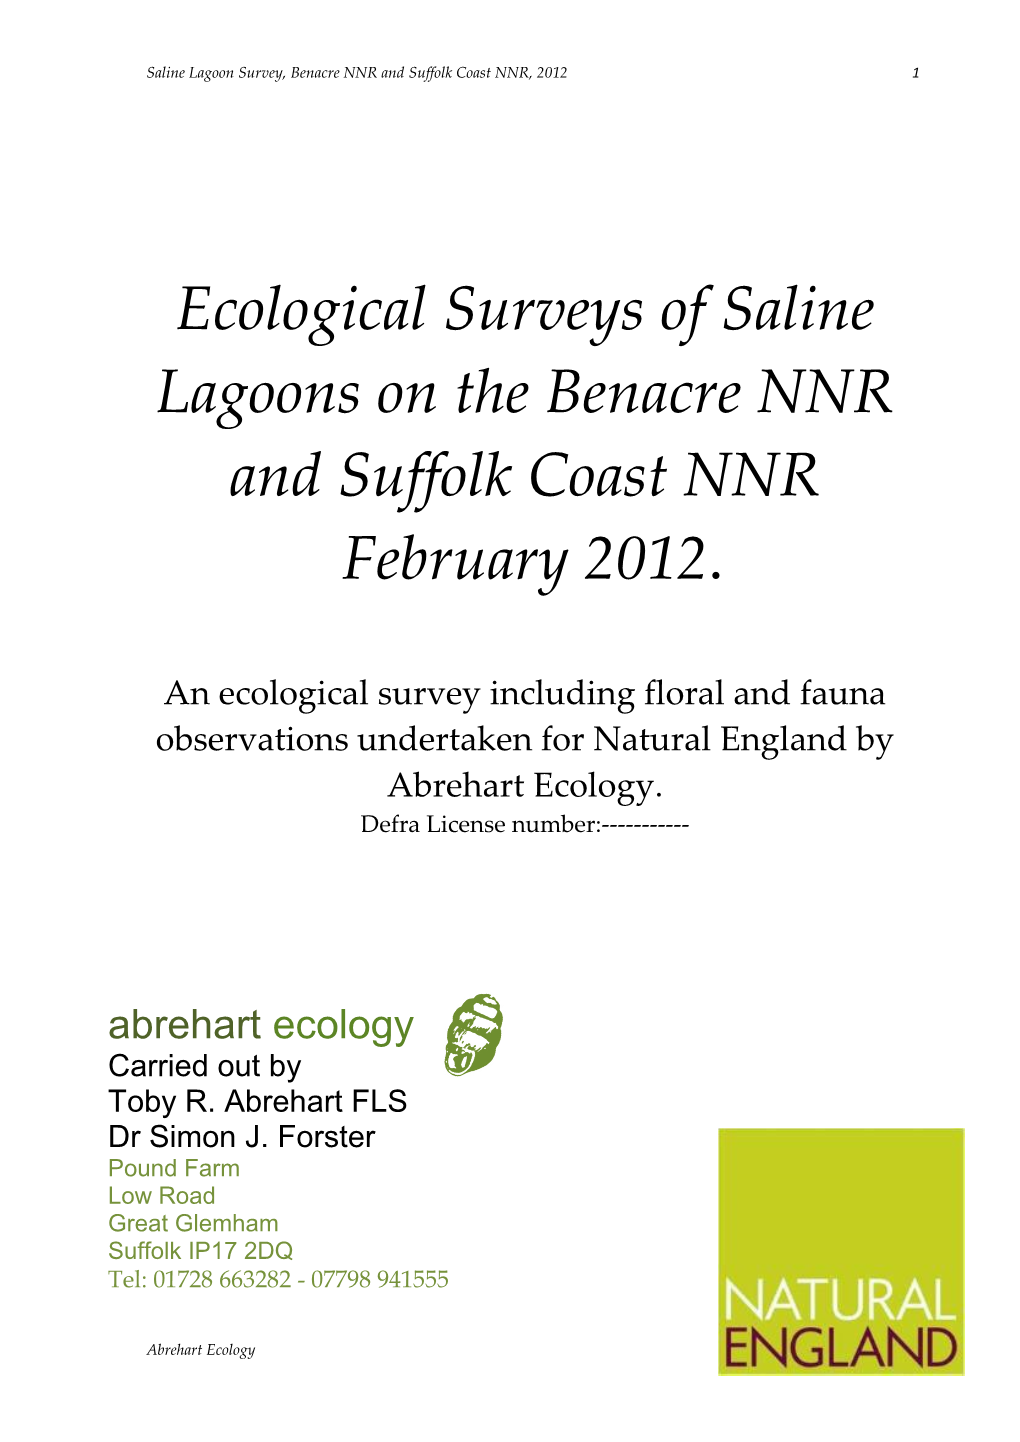 Ecological Surveys of Saline Lagoons on the Benacre NNR and Suffolk Coast NNR February 2012